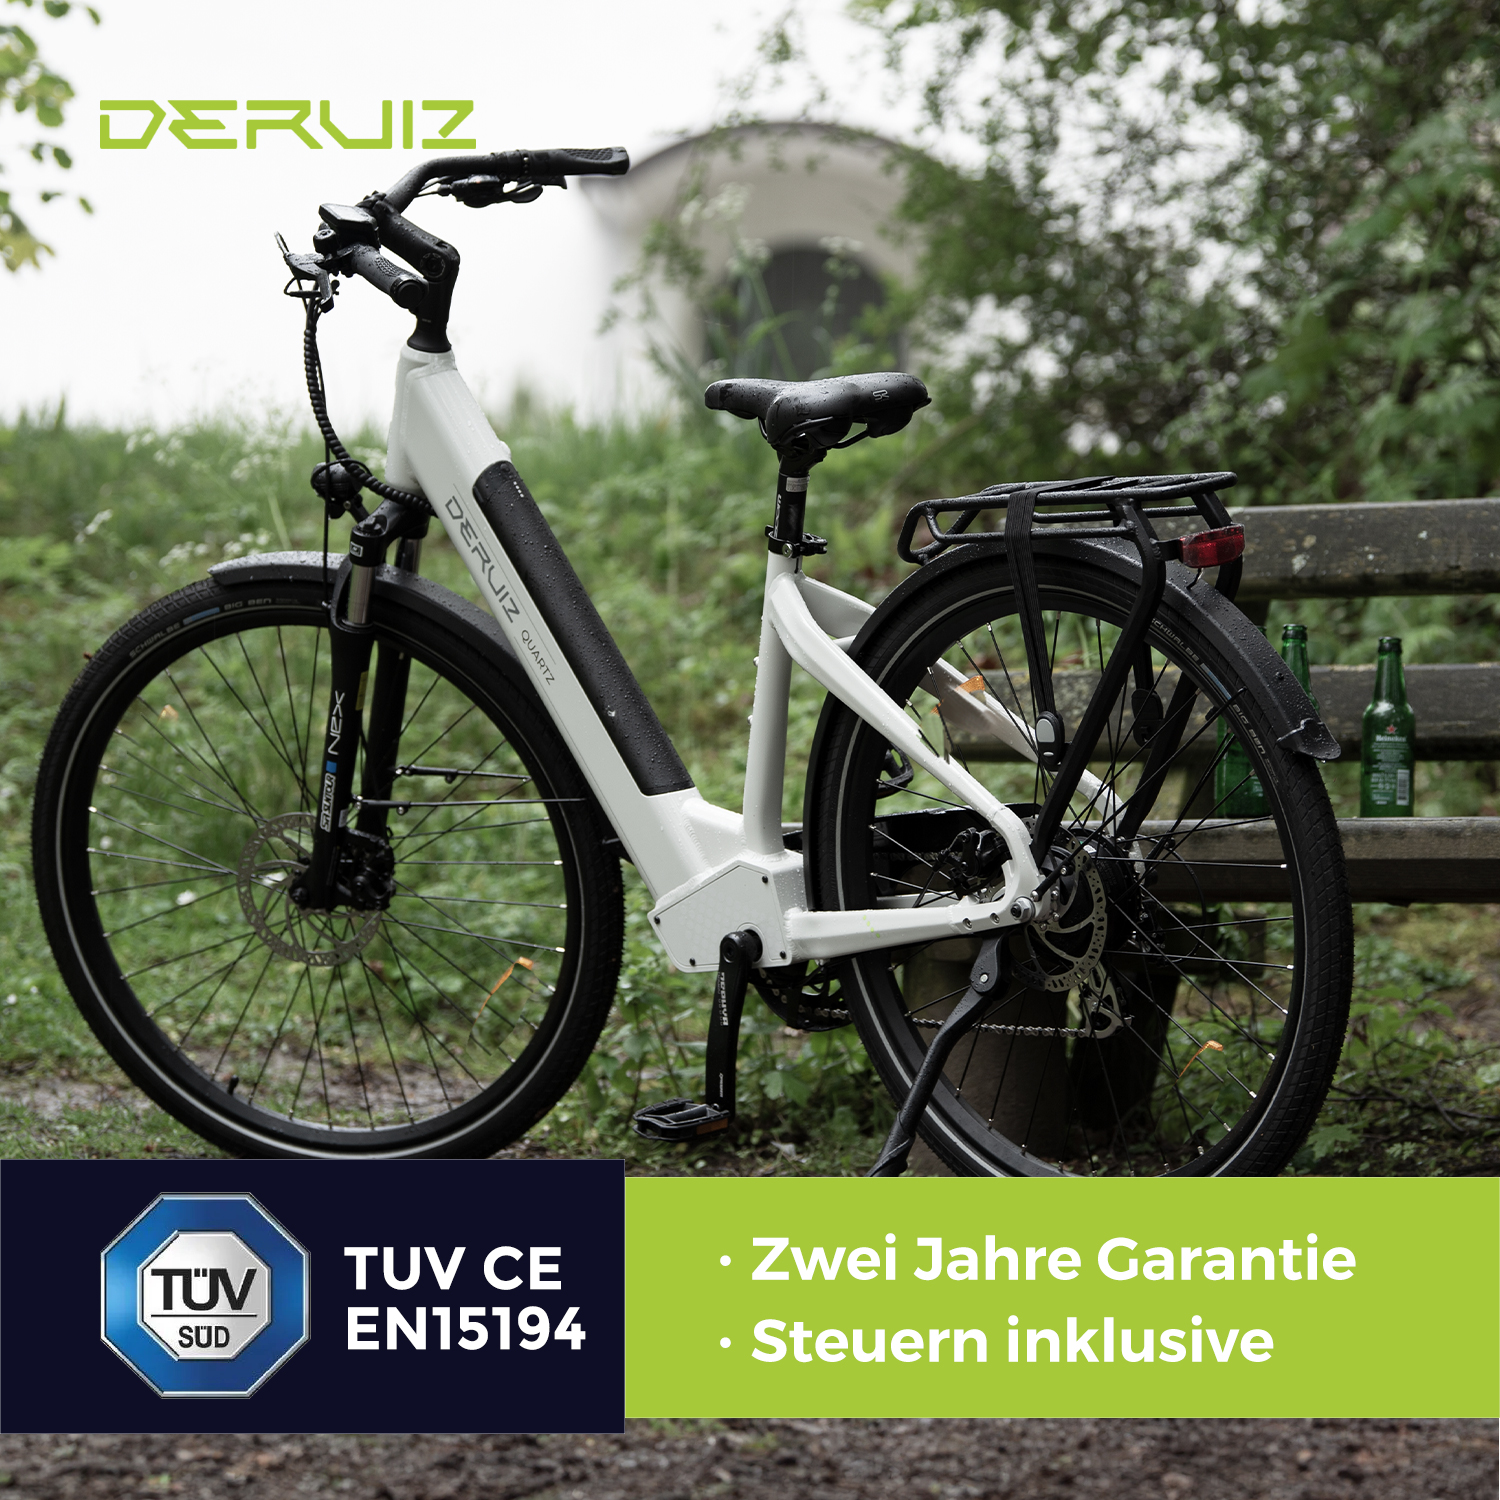 Elektrofahrrad 28 Zoll, (Laufradgröße: DERUIZ Citybike Damen-Rad, Cityrad 644, Weiß)